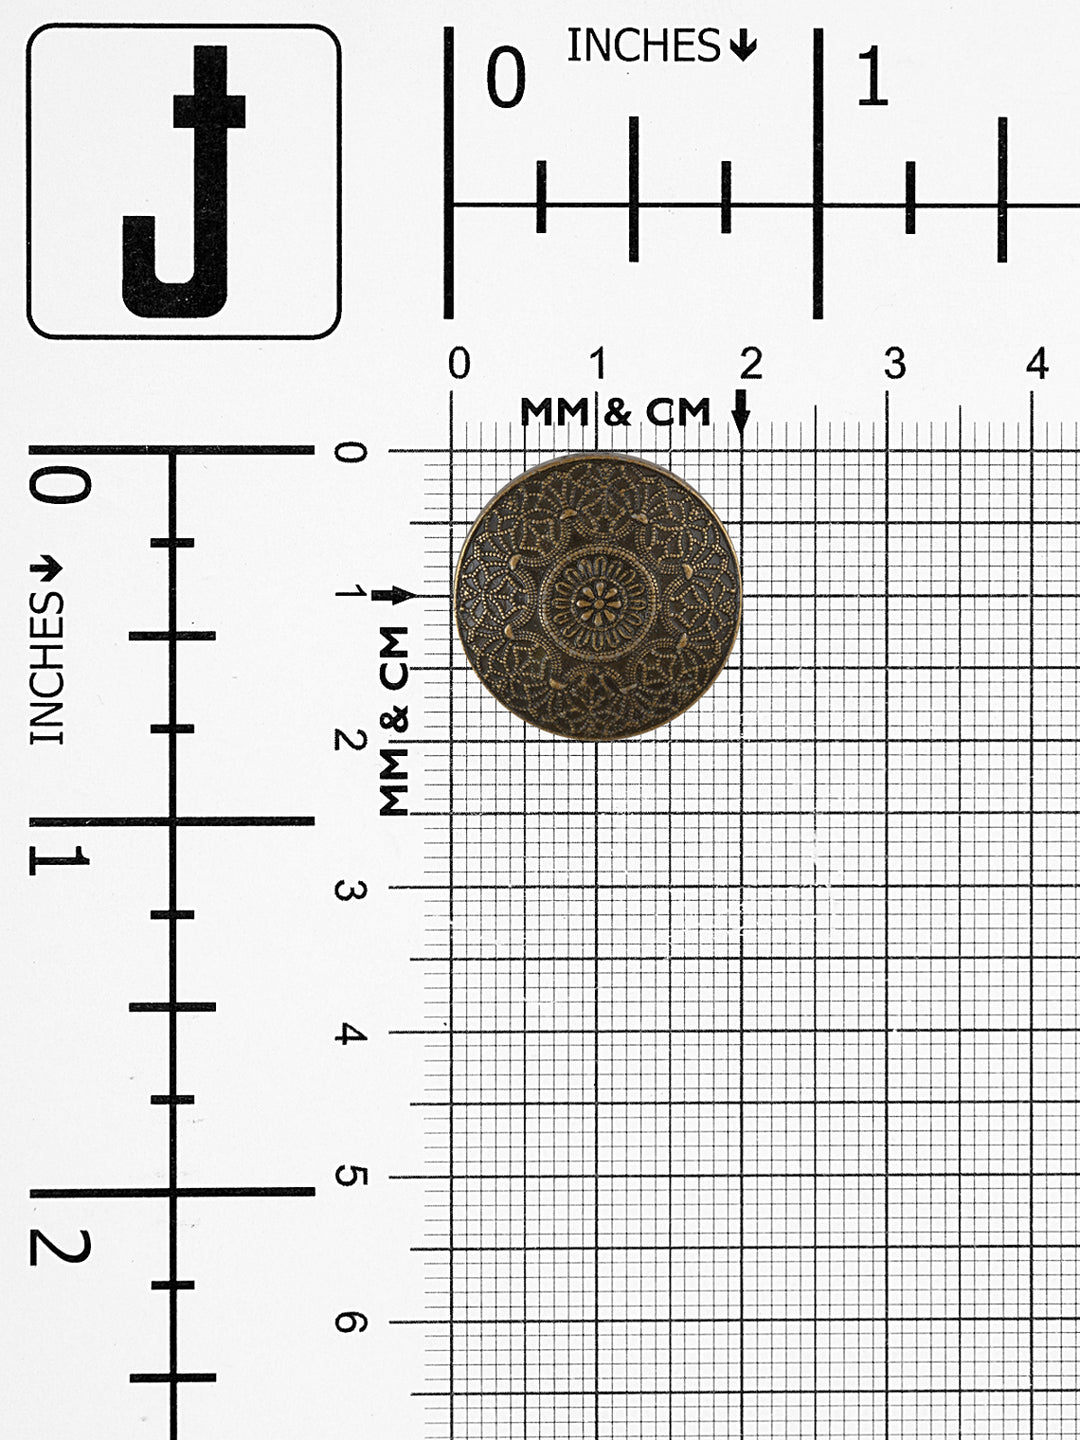 Antique Brass Mandala Design Sherwani Button